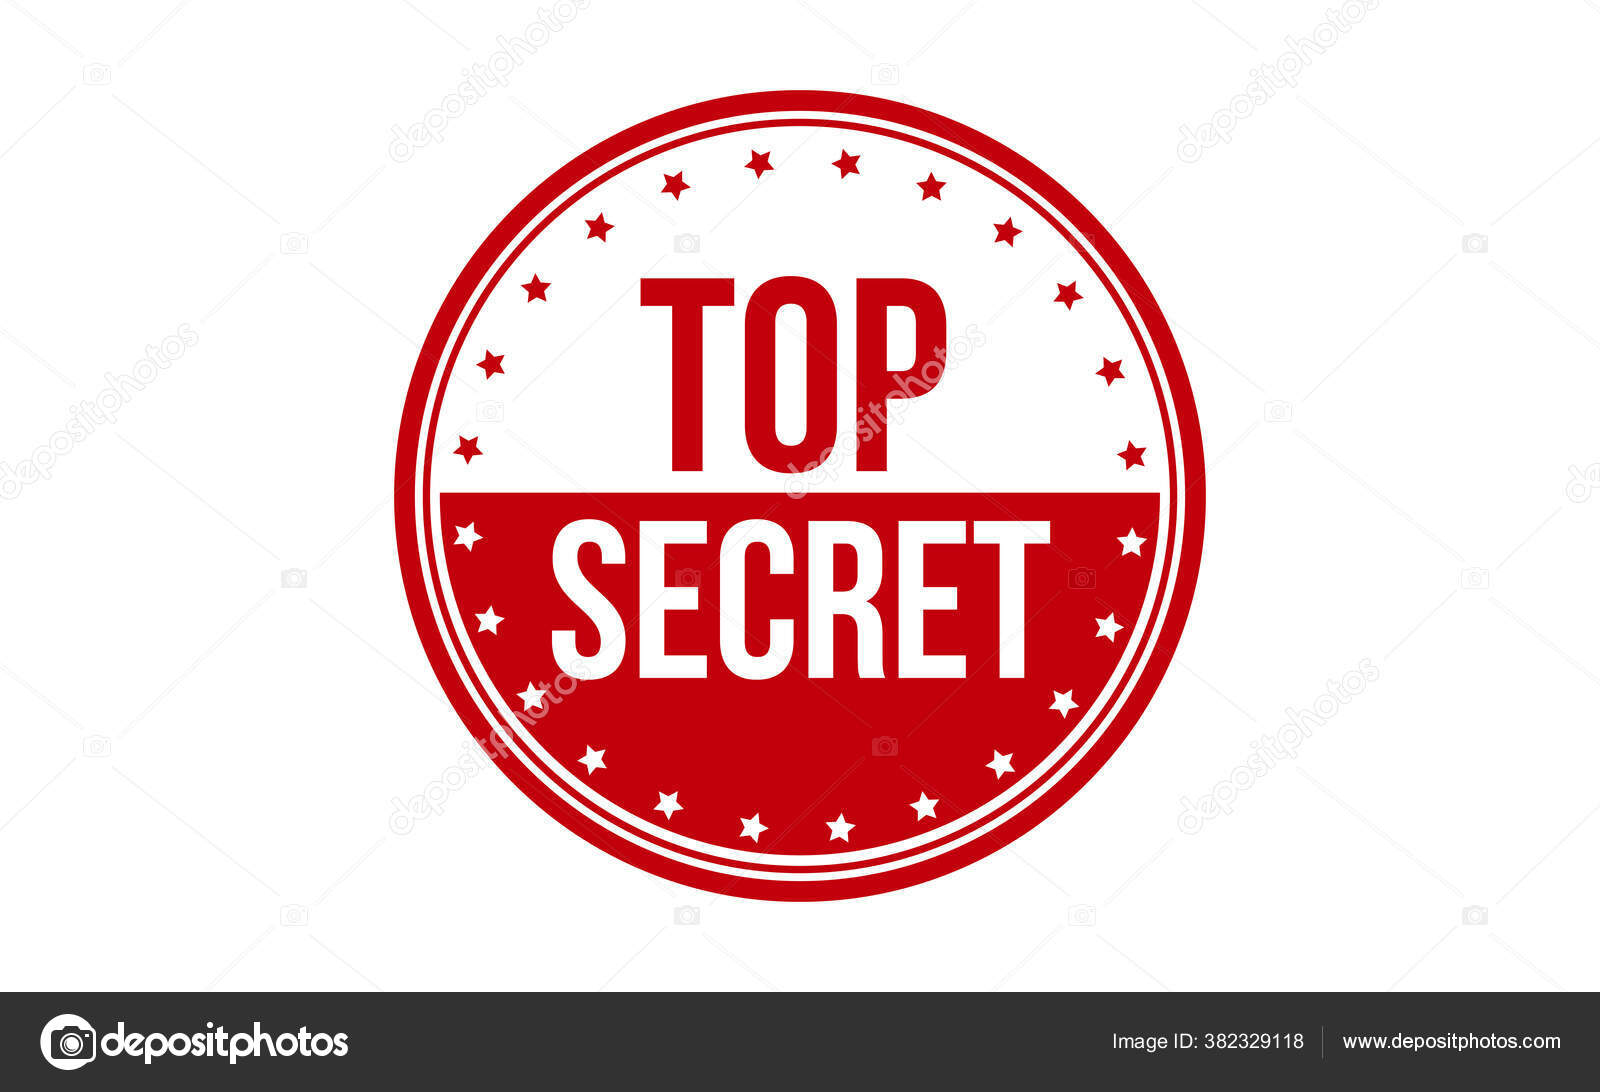 Top Secret Logo Vector Images Royalty Free Top Secret Logo Vectors Page 2 Depositphotos